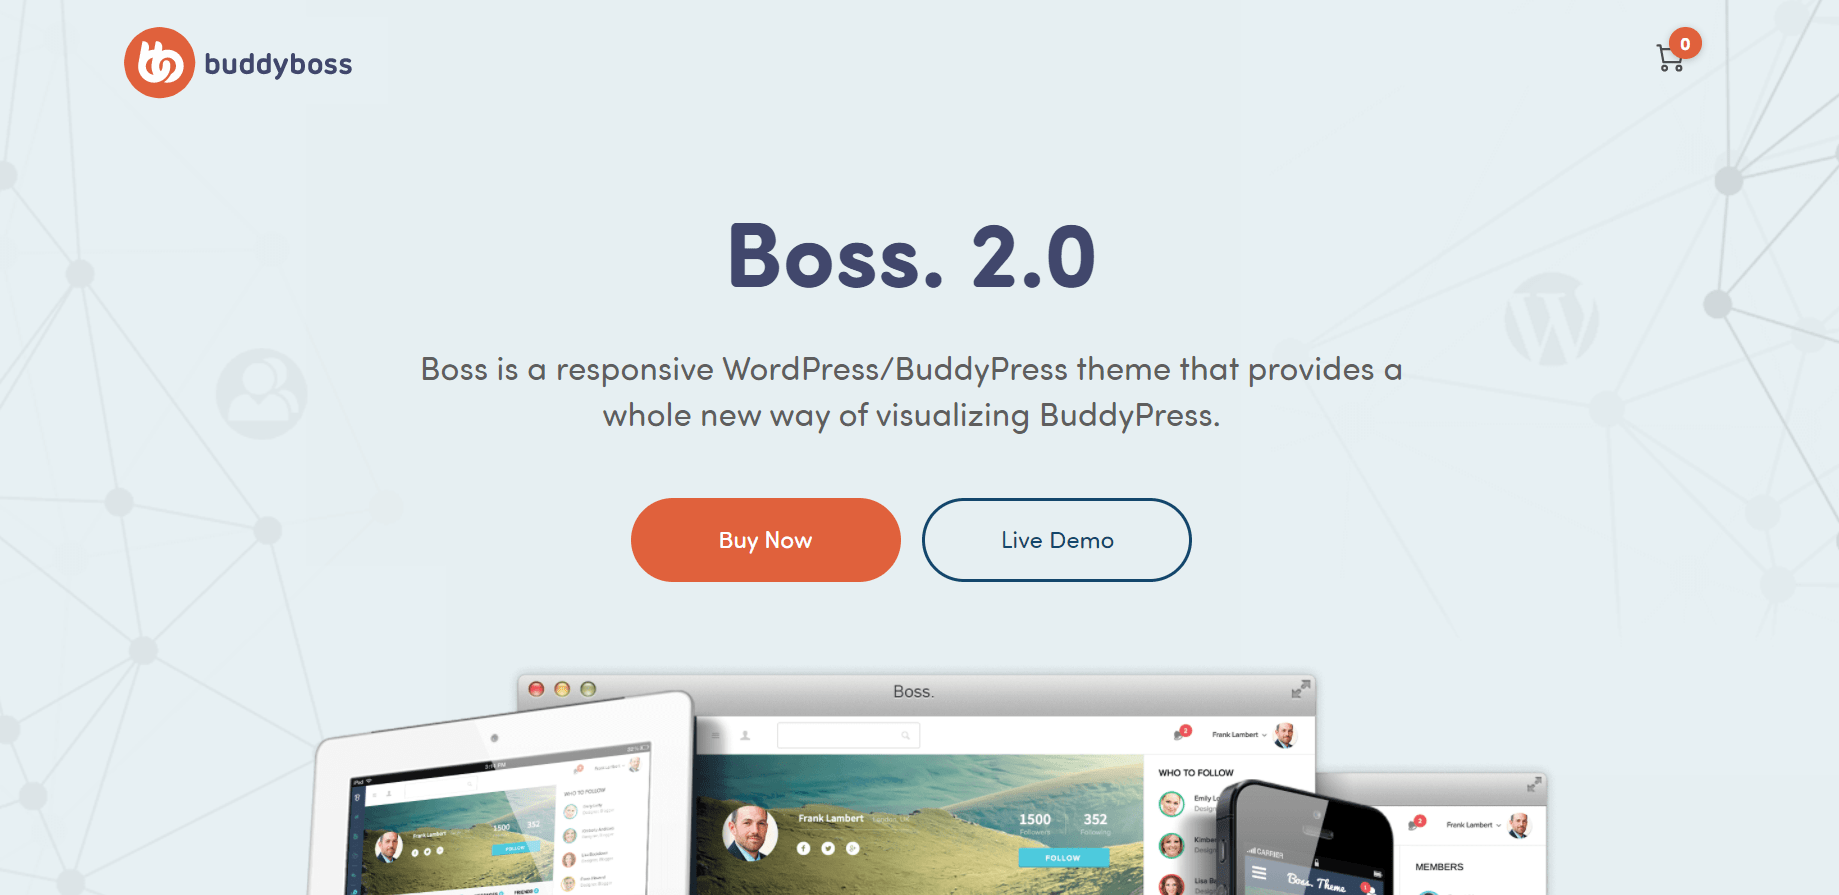 Best BuddyBoss Themes-Boss 2.0 Theme- Info Page